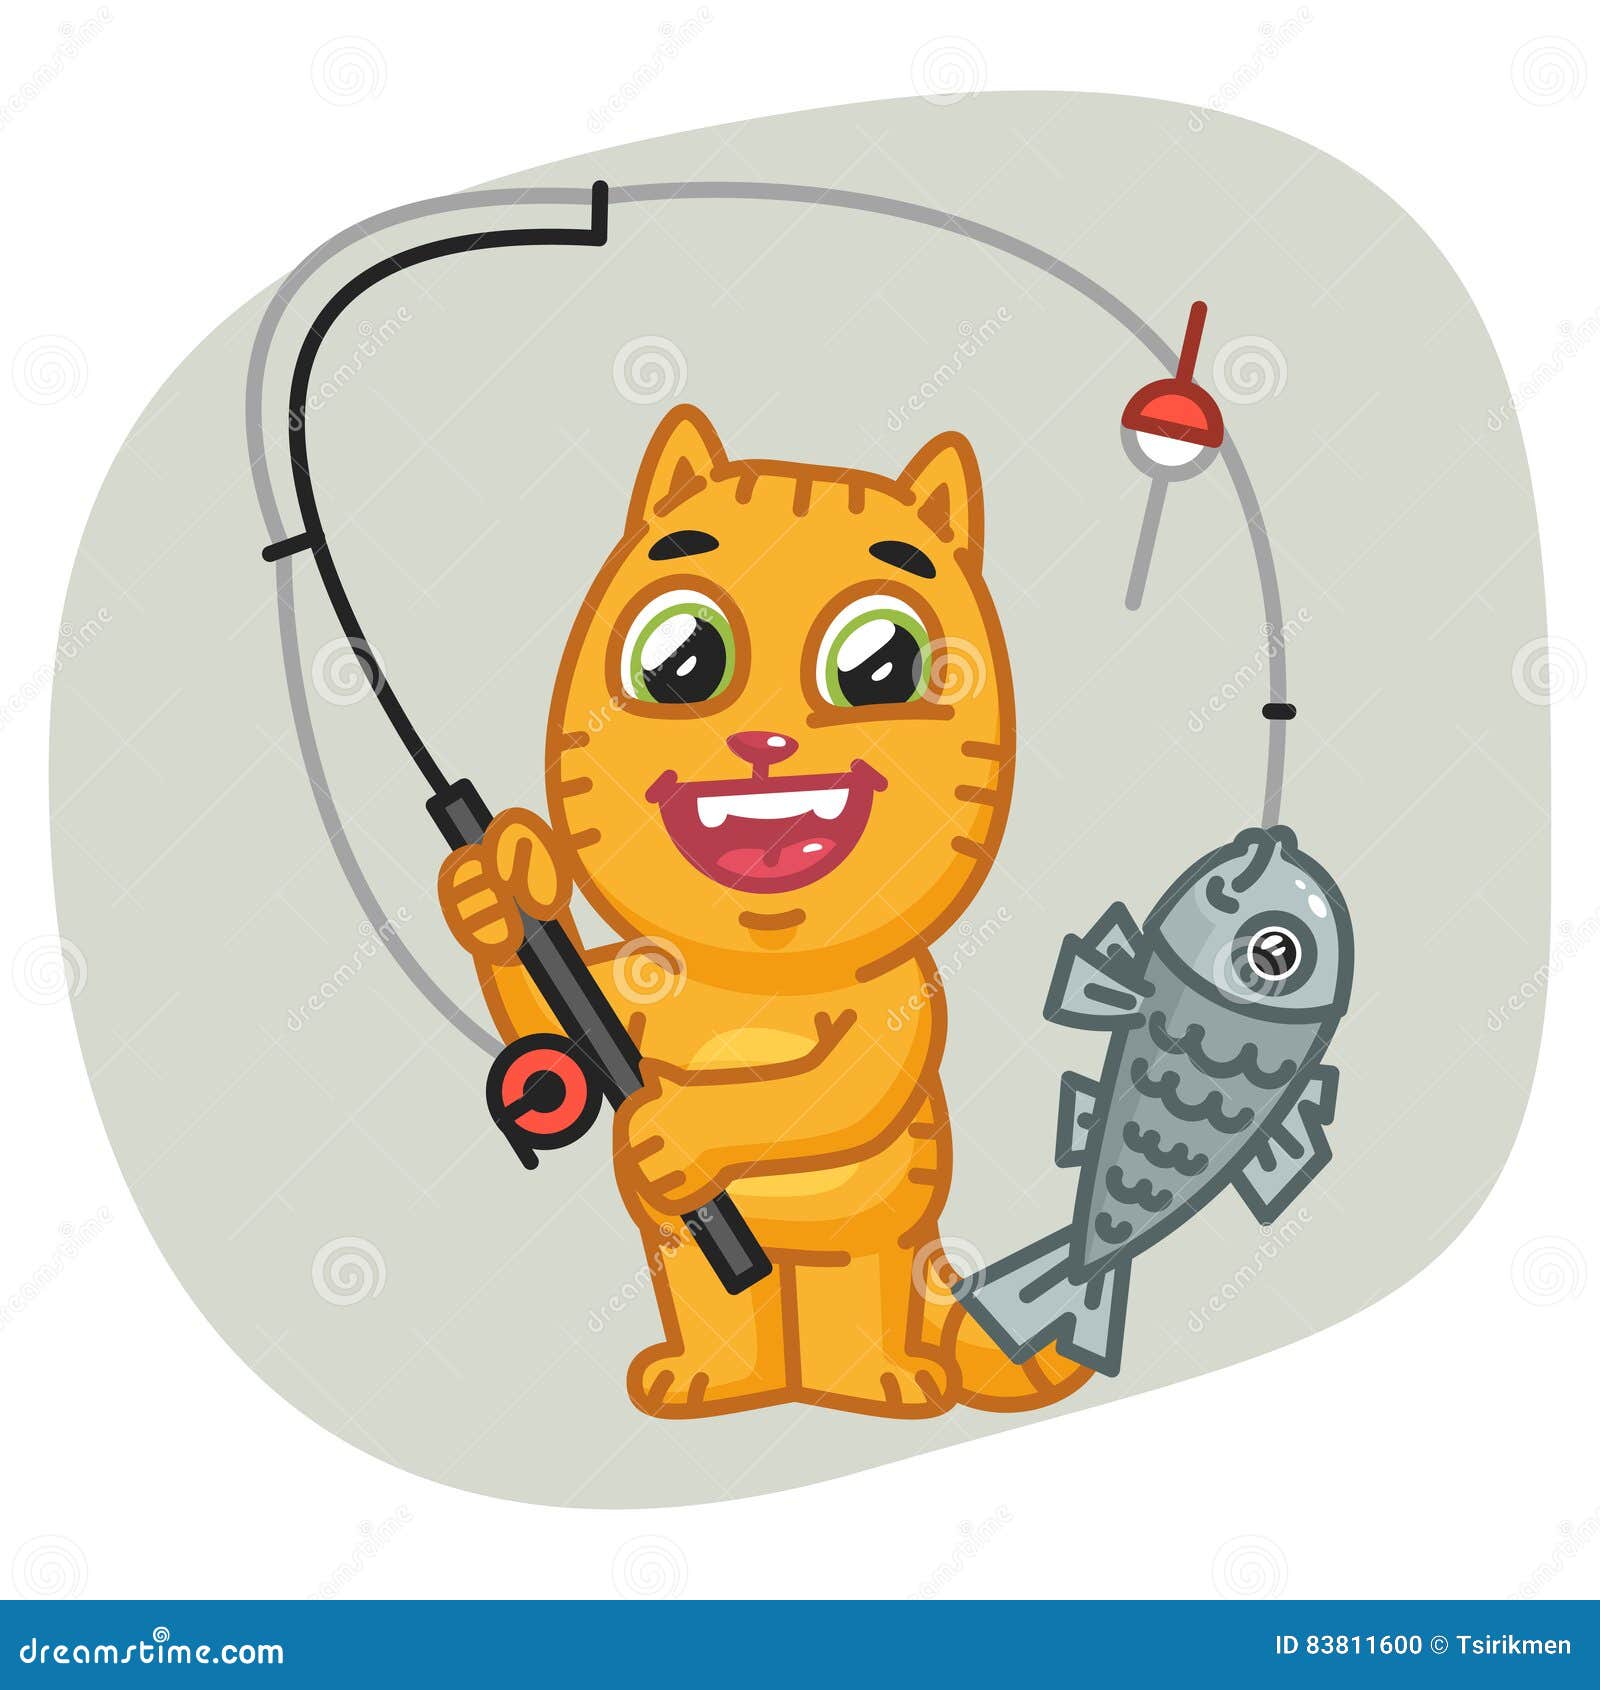 https://thumbs.dreamstime.com/z/cat-caught-big-fish-fishing-rod-vector-illustration-format-eps-83811600.jpg